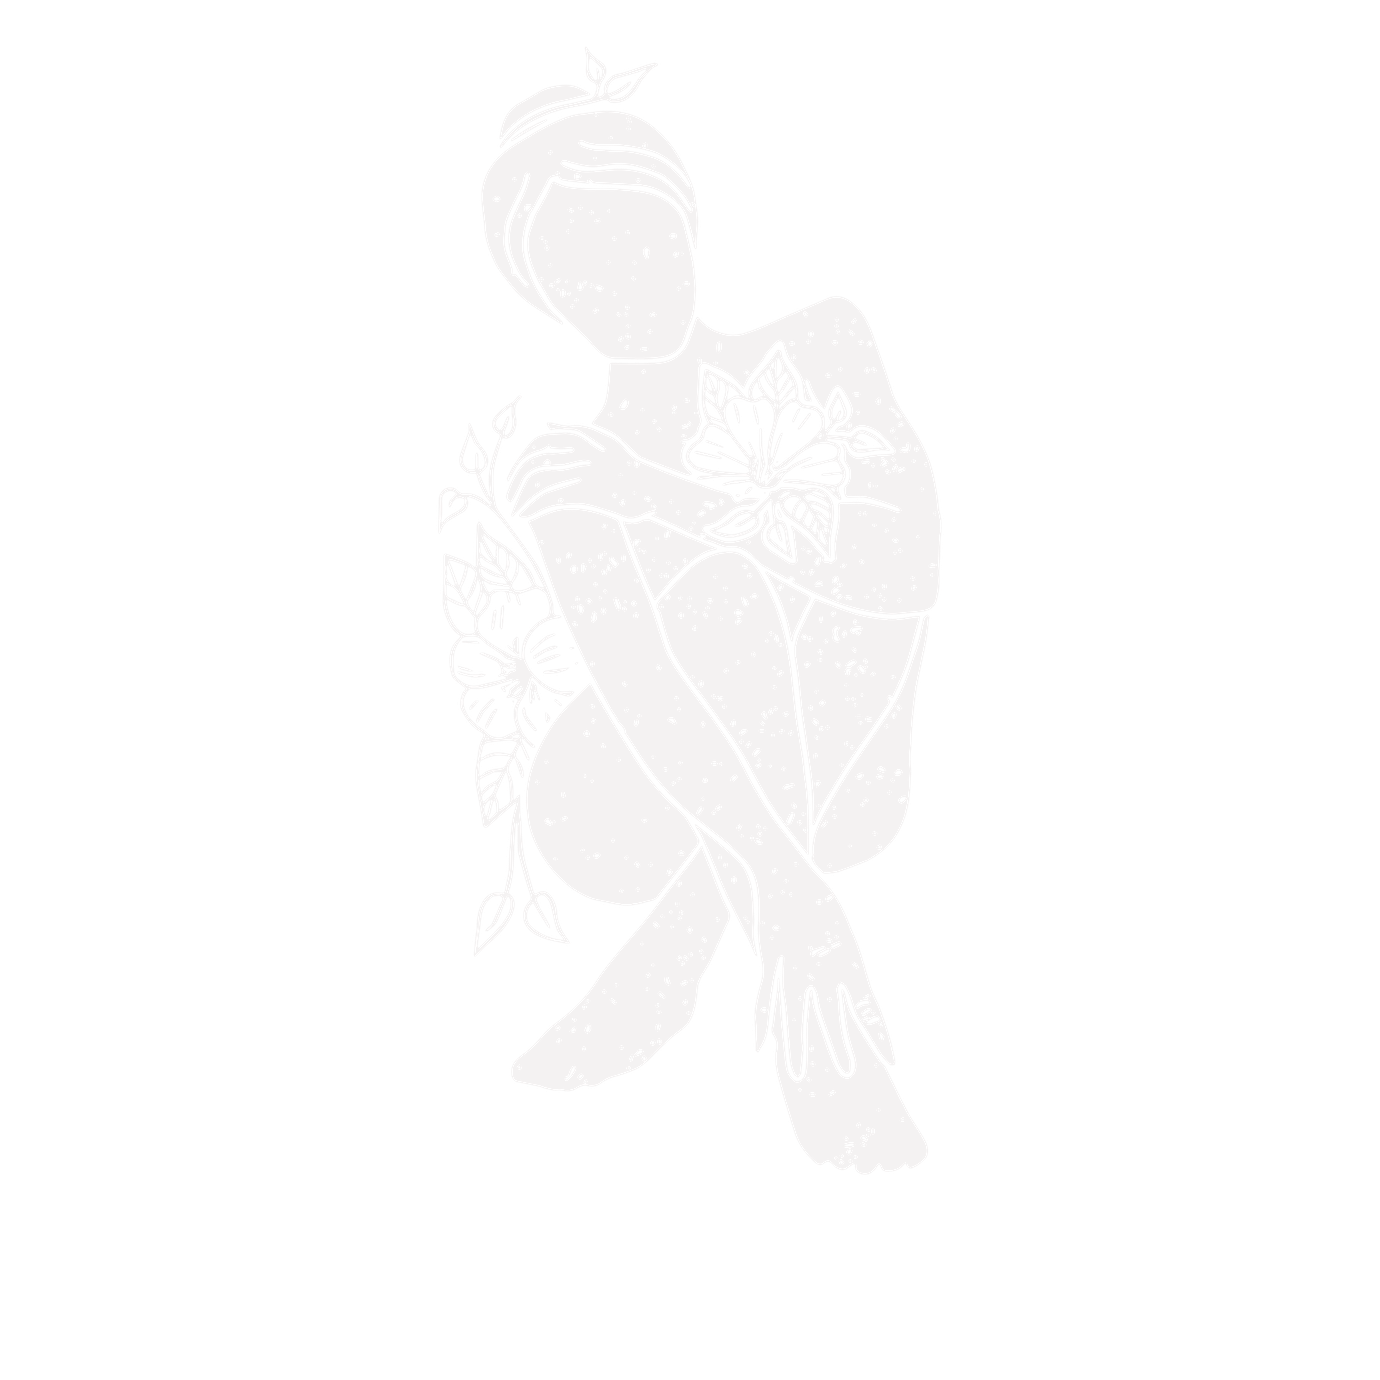 SubLuna Illustration - Hair